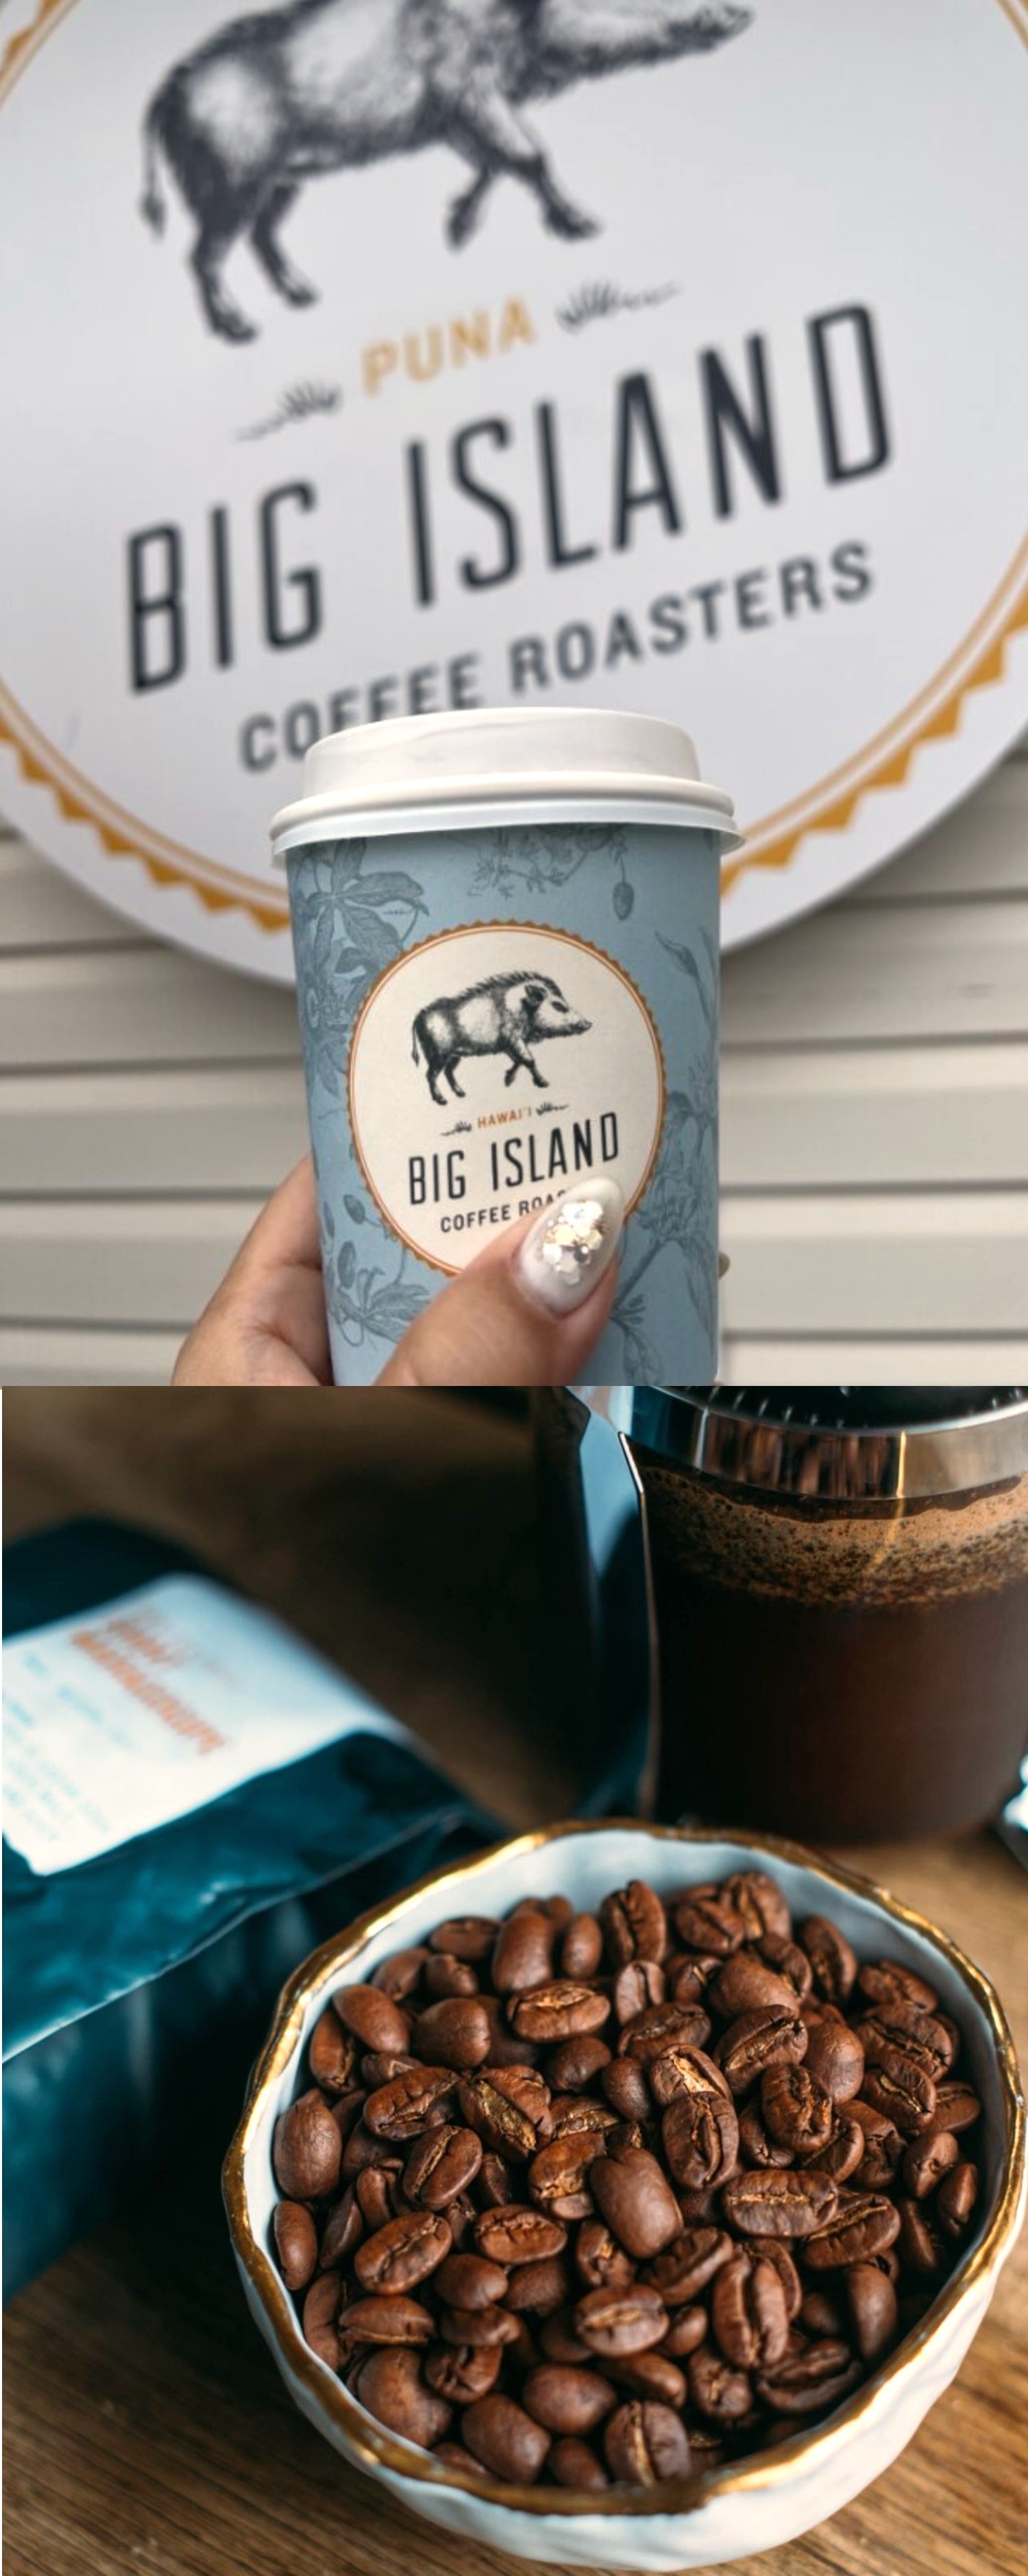 Big Island Coffee Roasters coffee cup and coffee beans